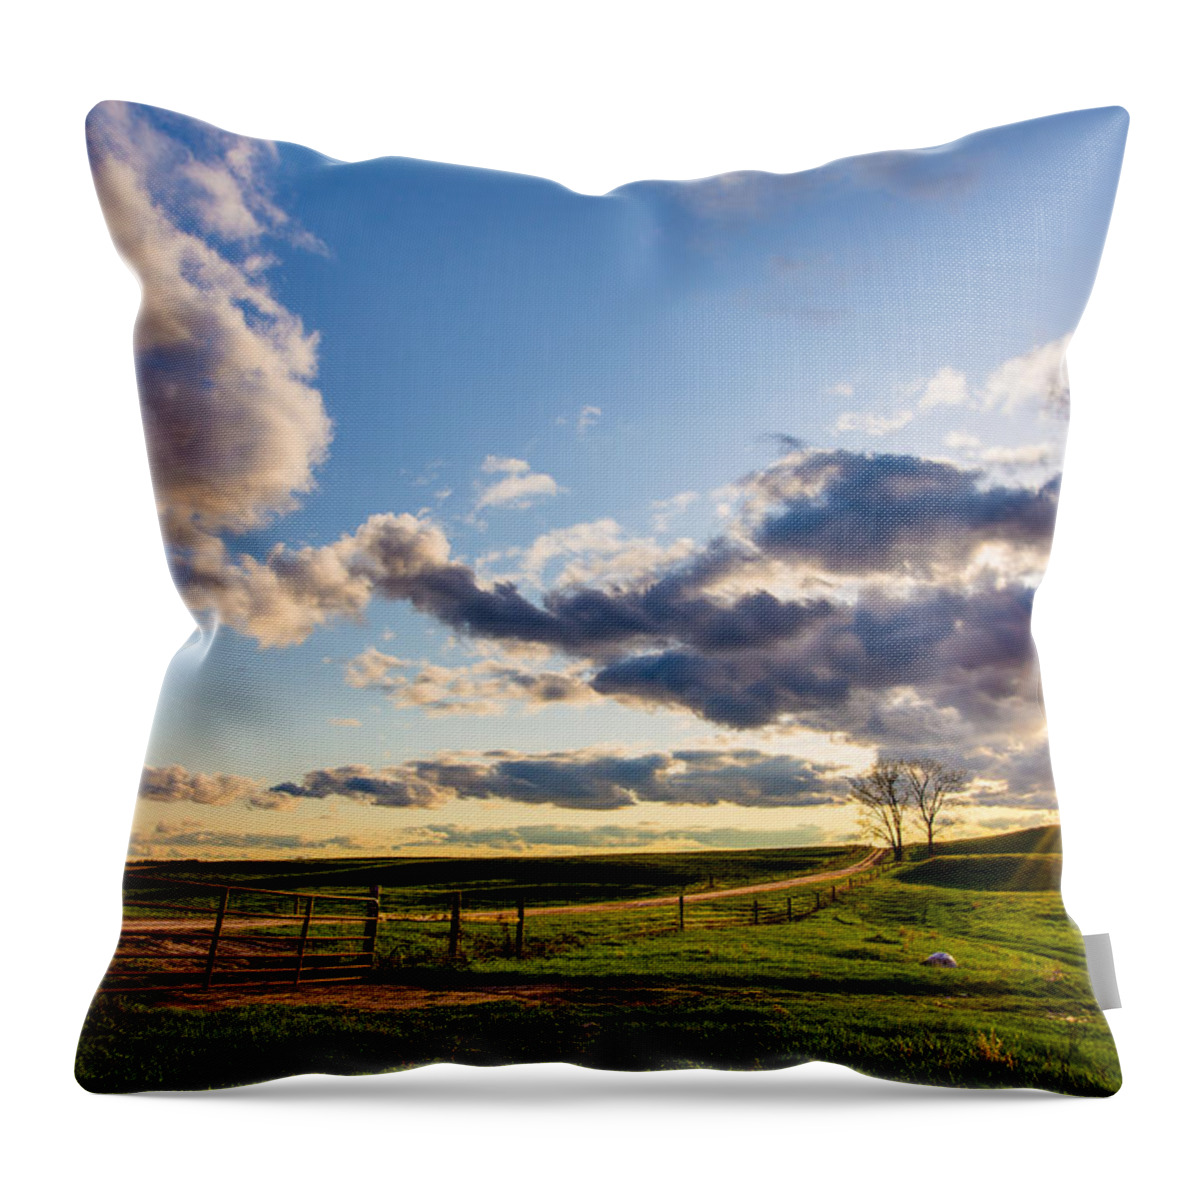 Sunset Sonata Throw Pillow featuring the photograph Sunset Sonata by Adam Mateo Fierro